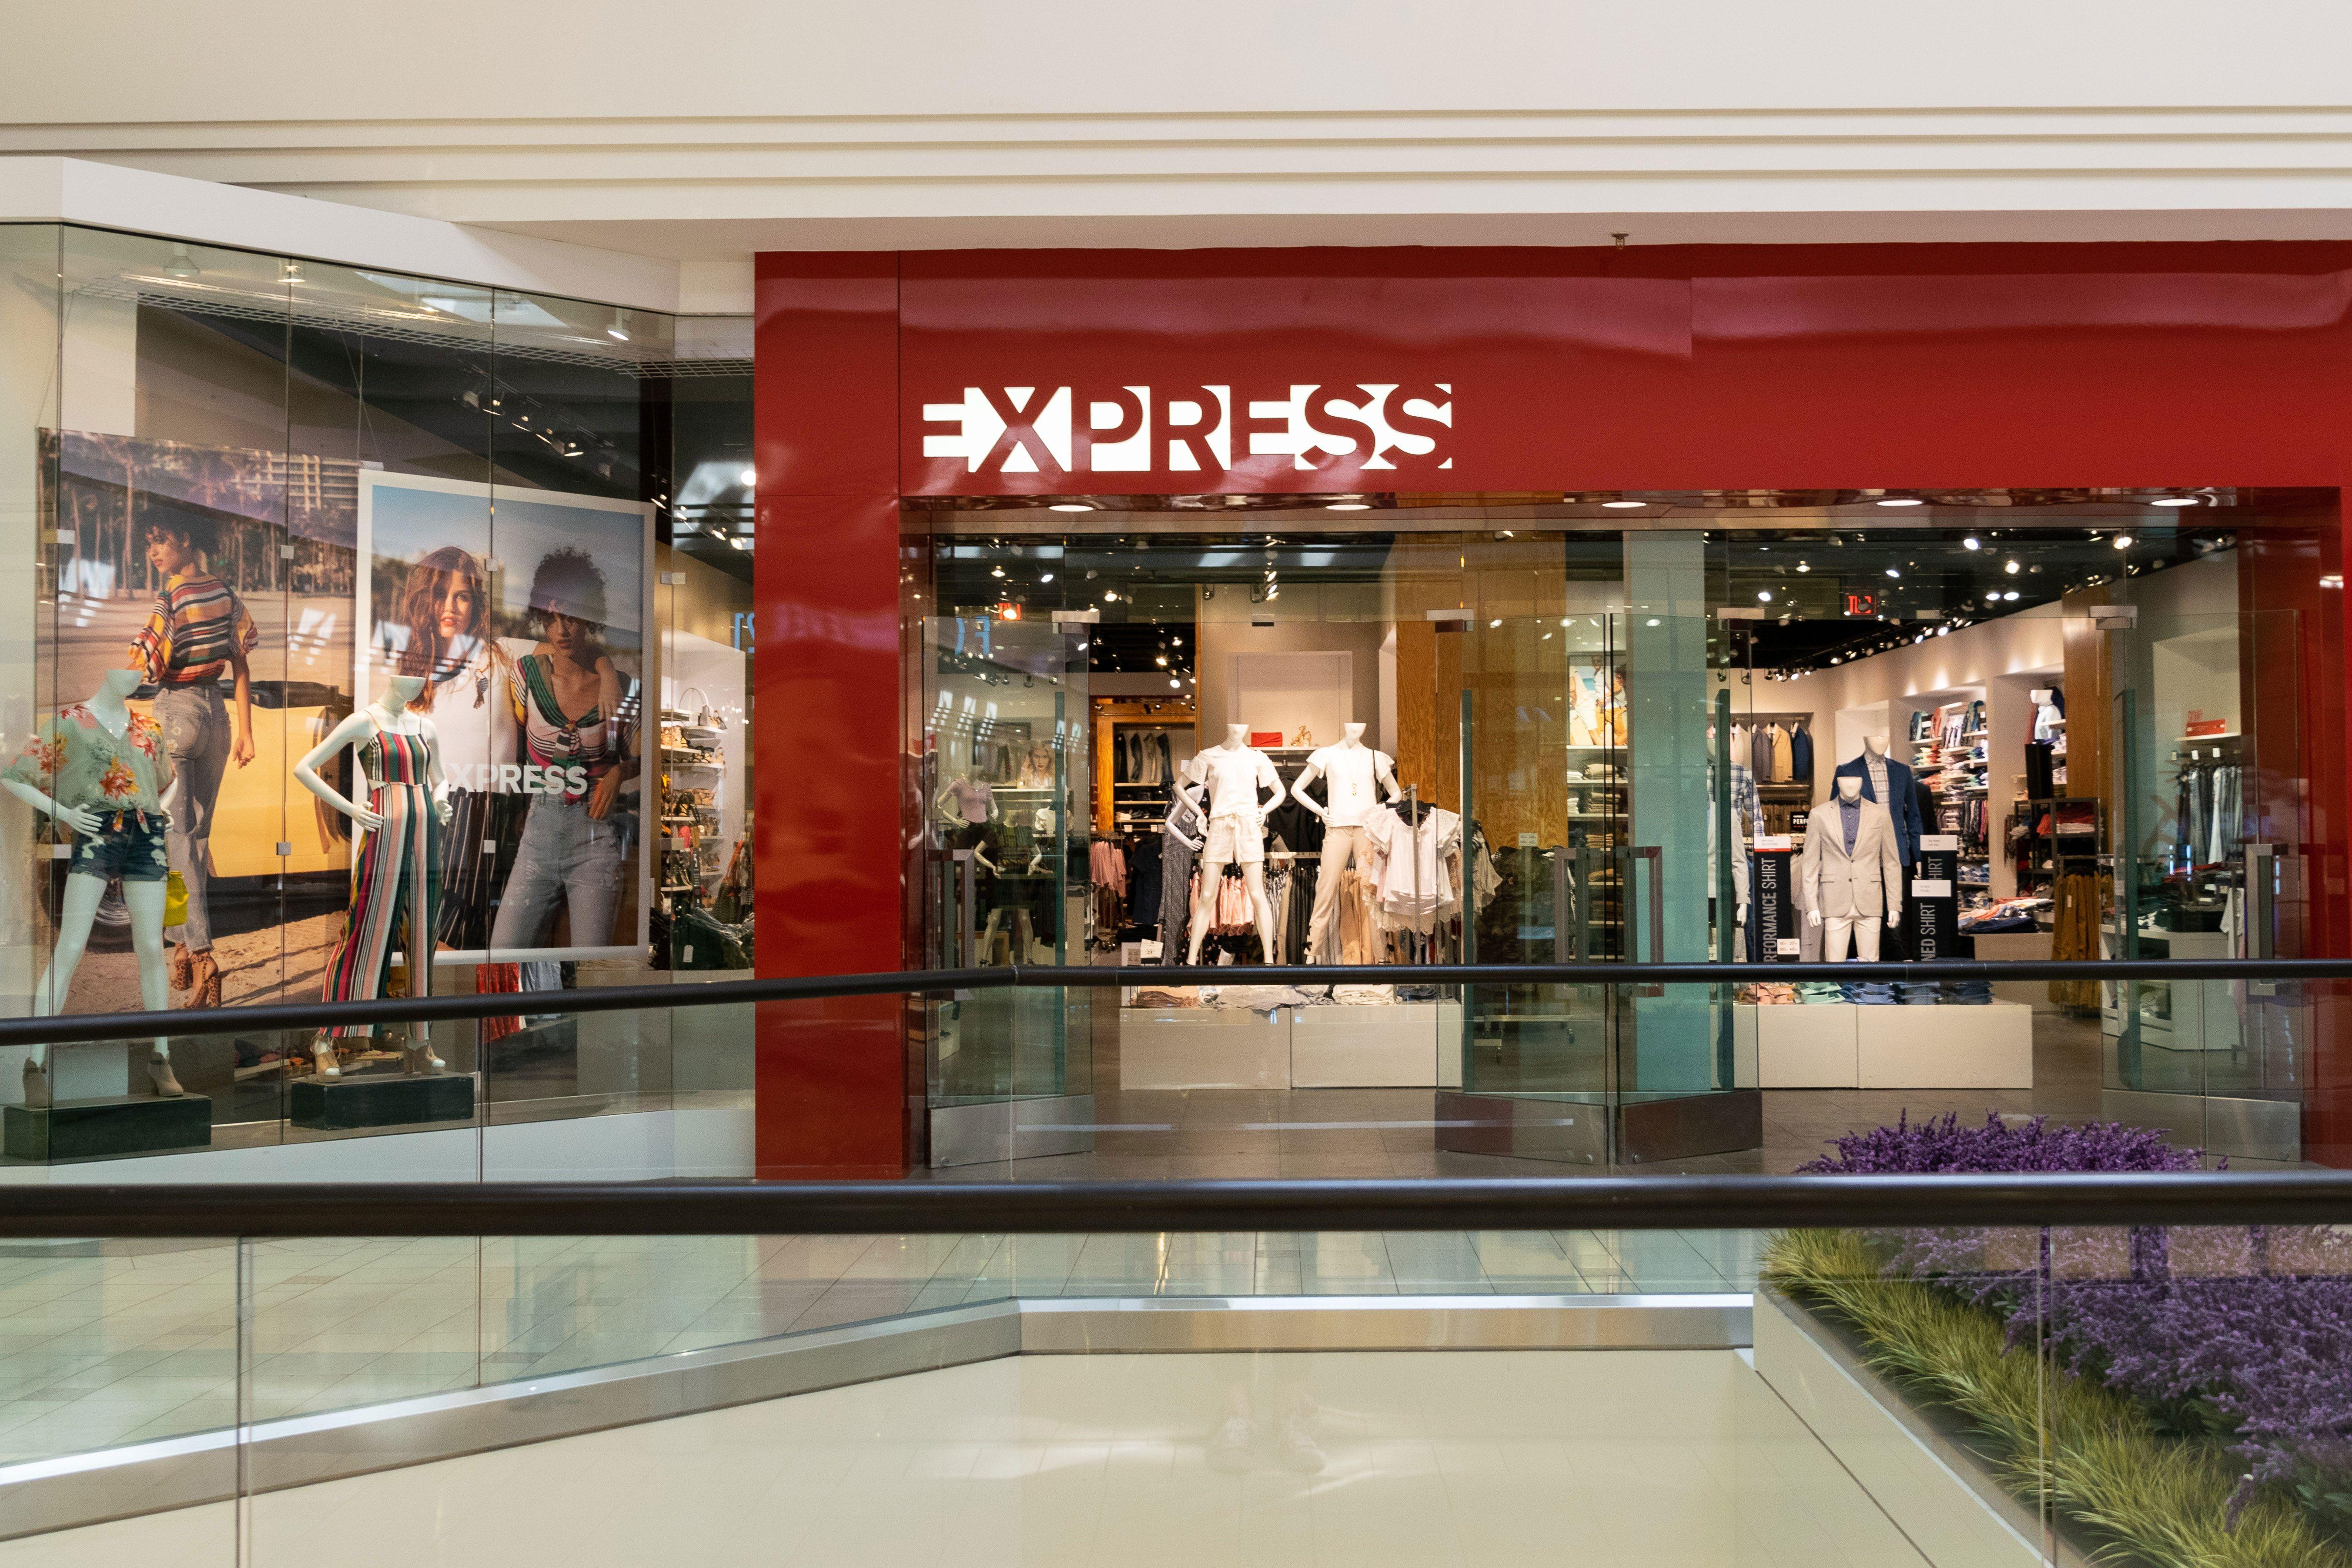 Express Clothing Store Logo - Express